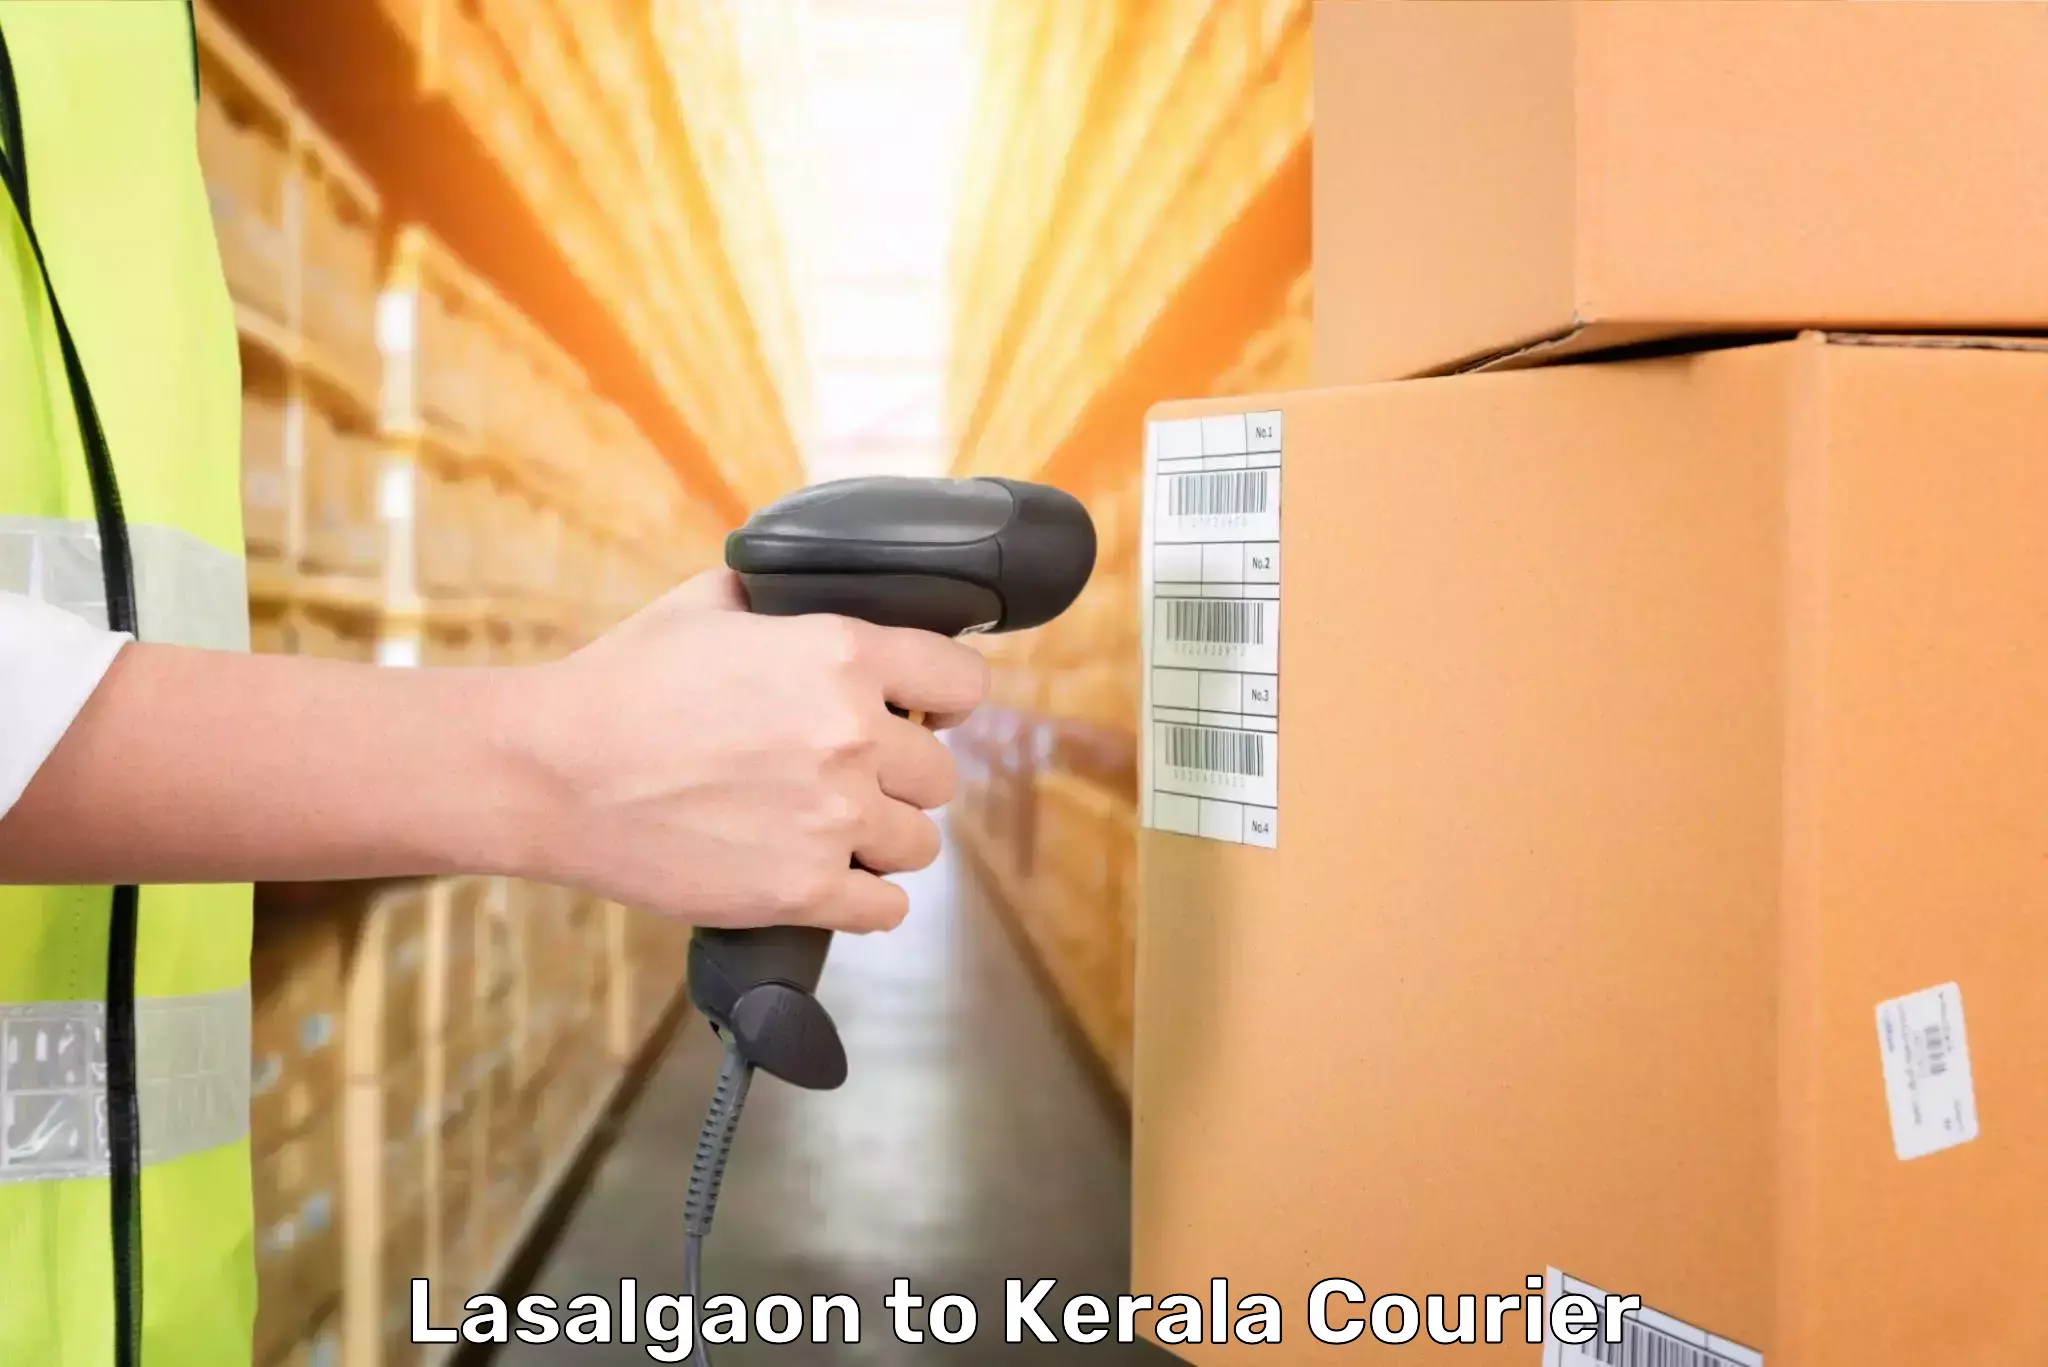 Baggage relocation service in Lasalgaon to Trivandrum